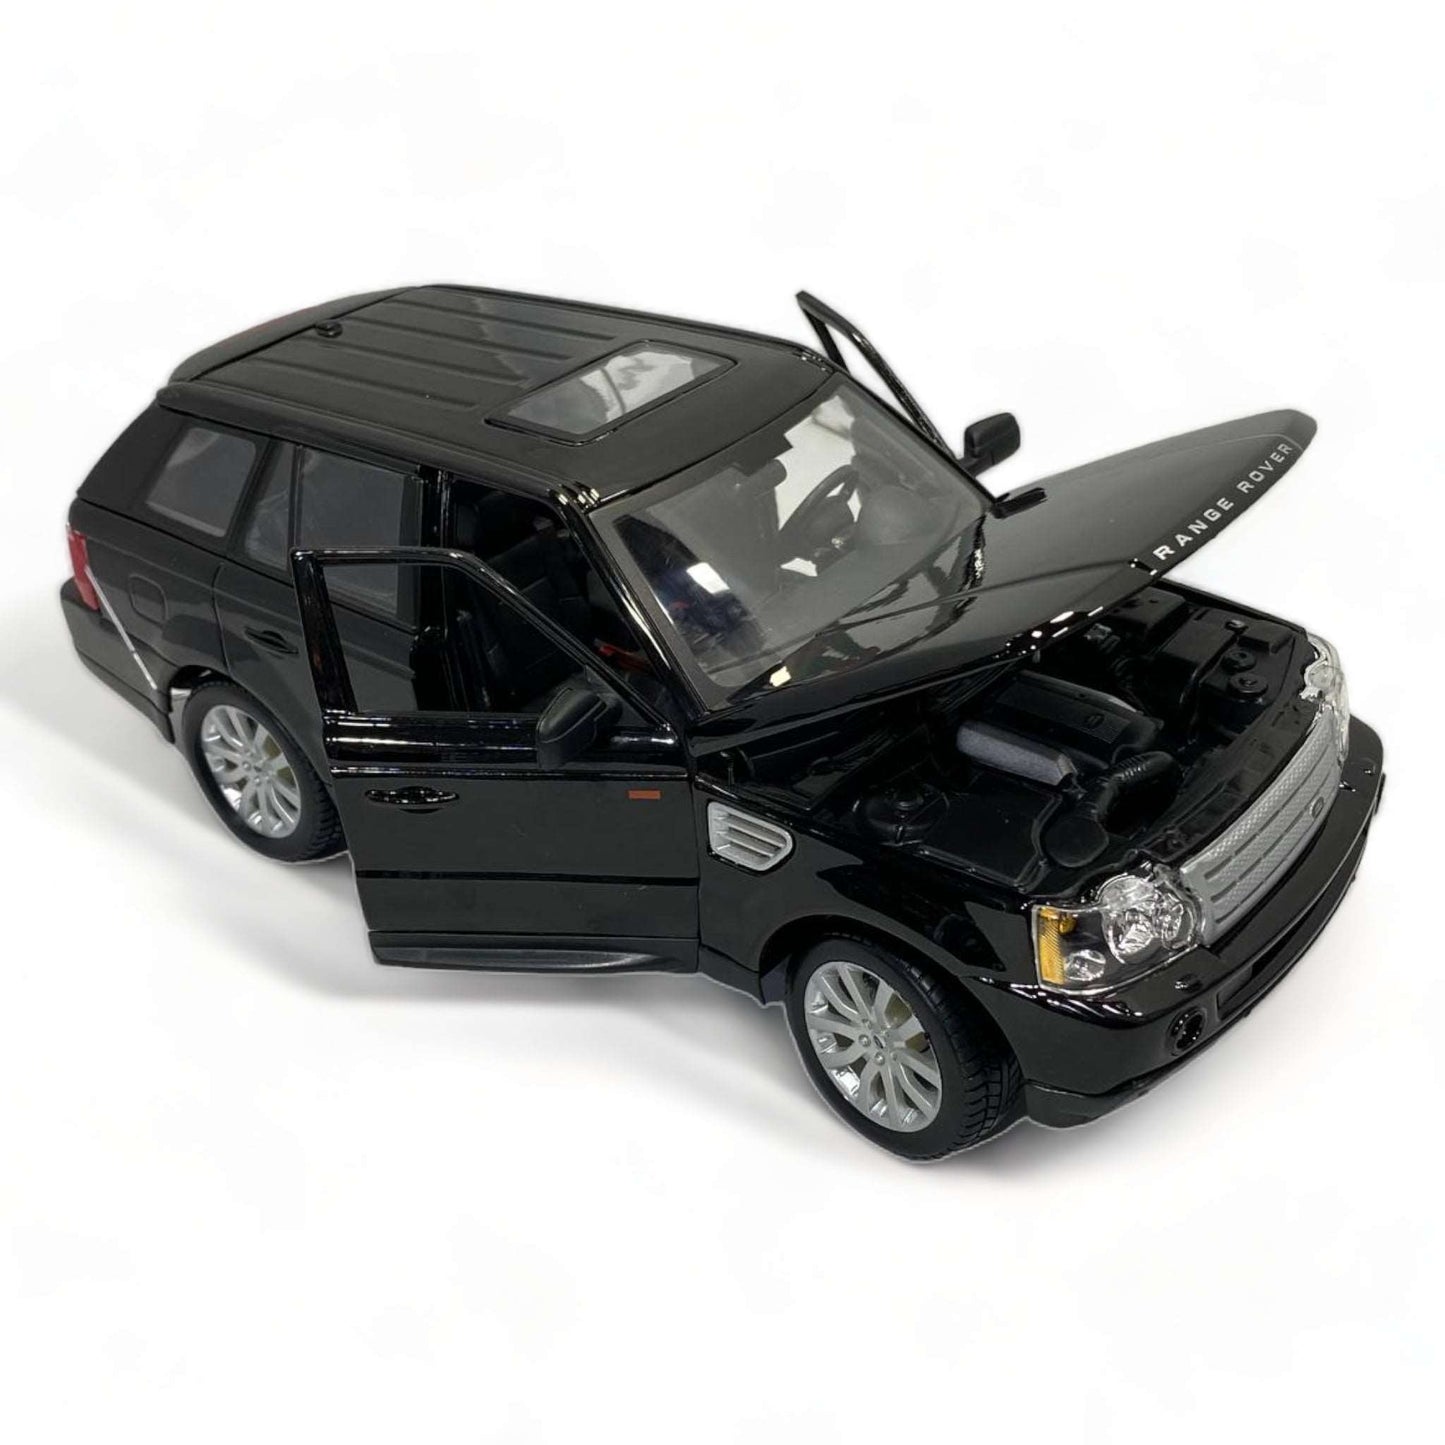 1/18 Diecast  Bburago Land Rover - Range Rover Sport (Black) Scale Model Car|Sold in Dturman.com Dubai UAE.